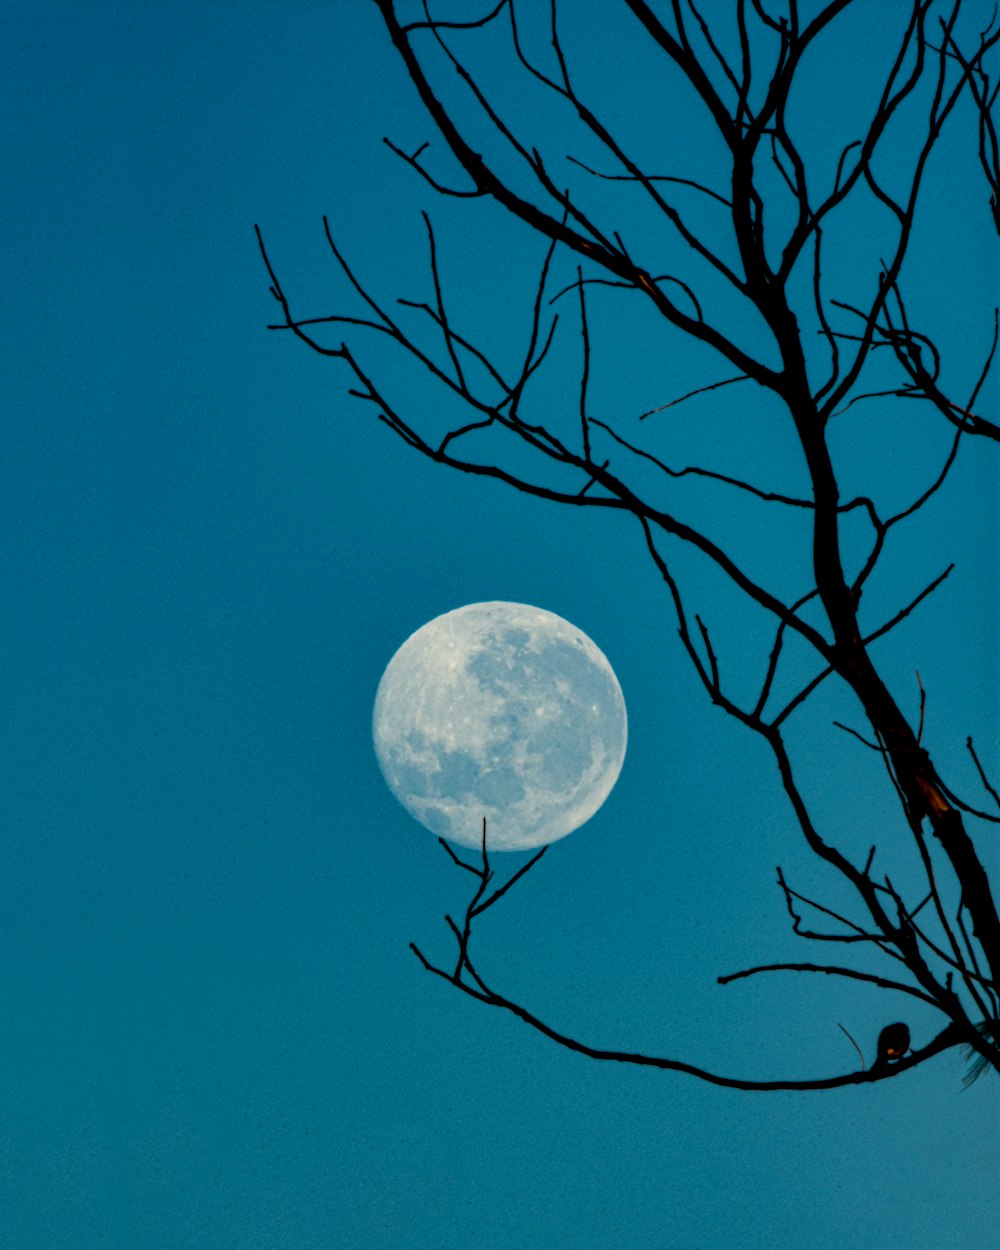 arbre nu montrant la pleine lune